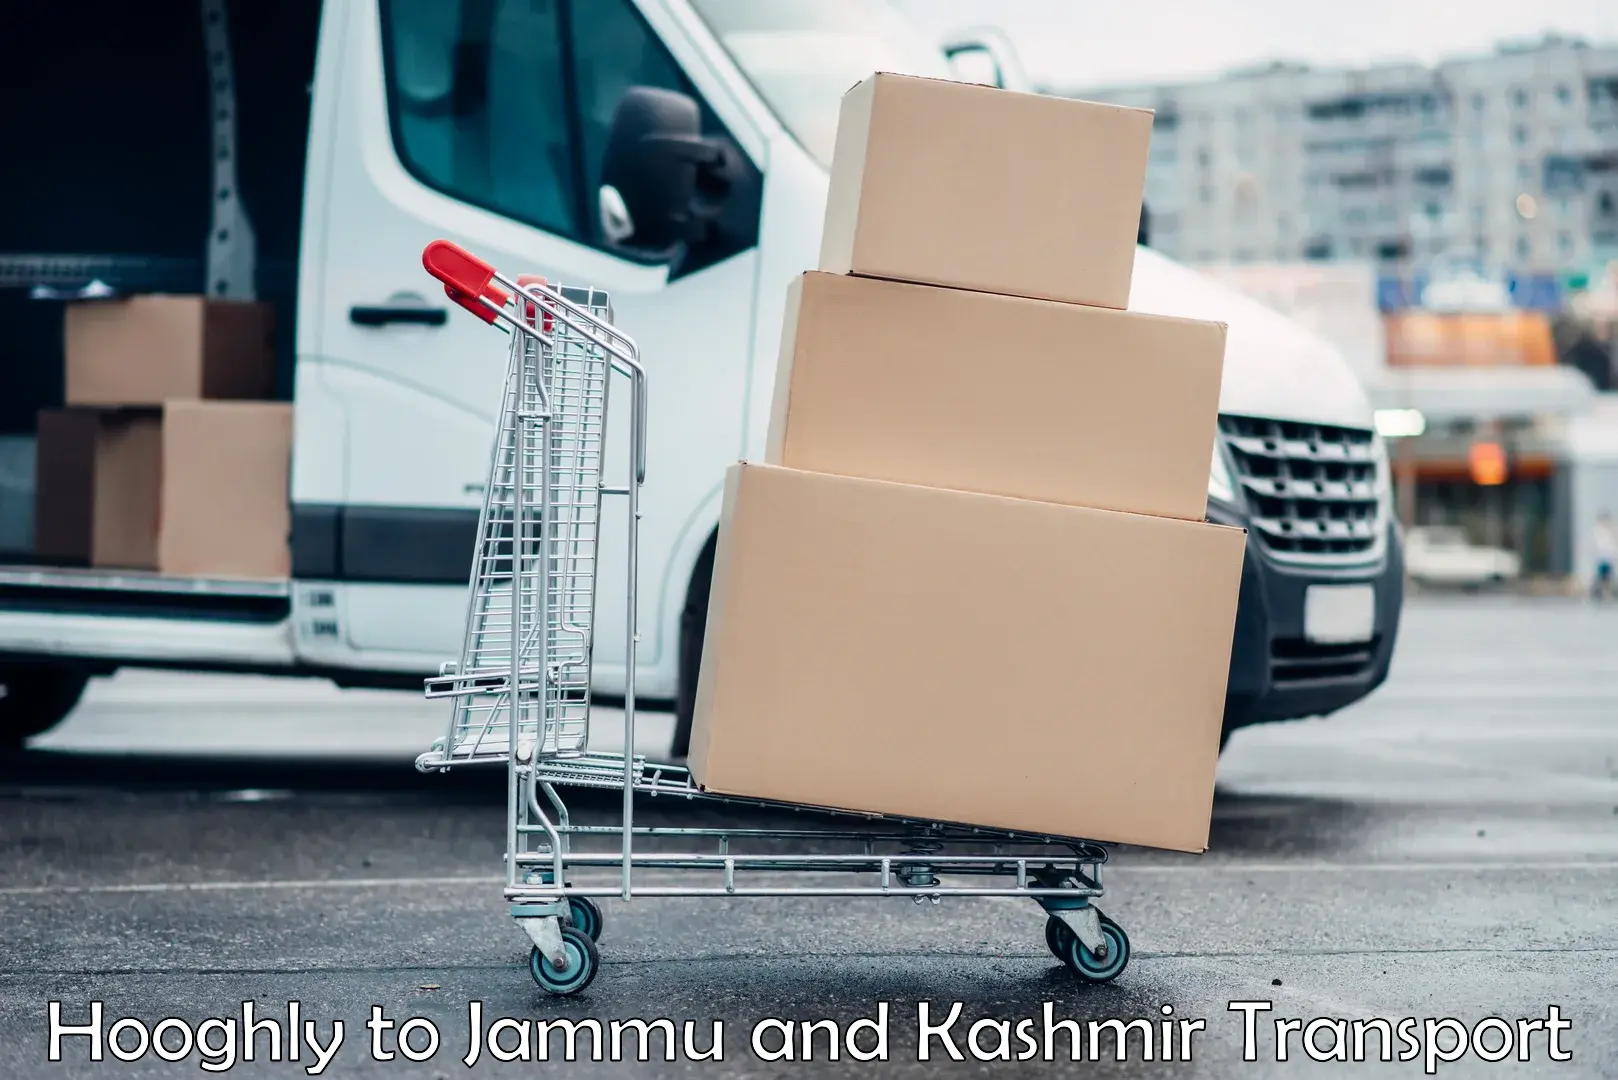 Commercial transport service Hooghly to Srinagar Kashmir